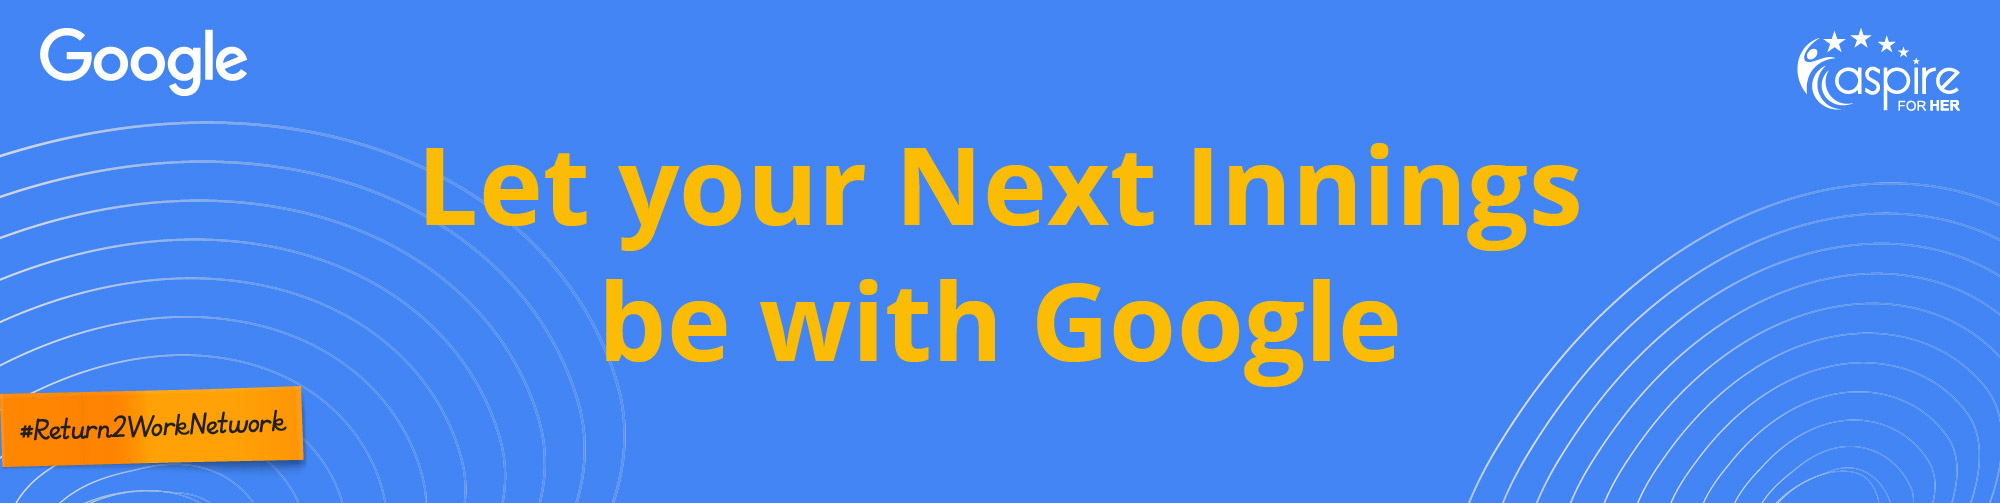 Google : Next Innings